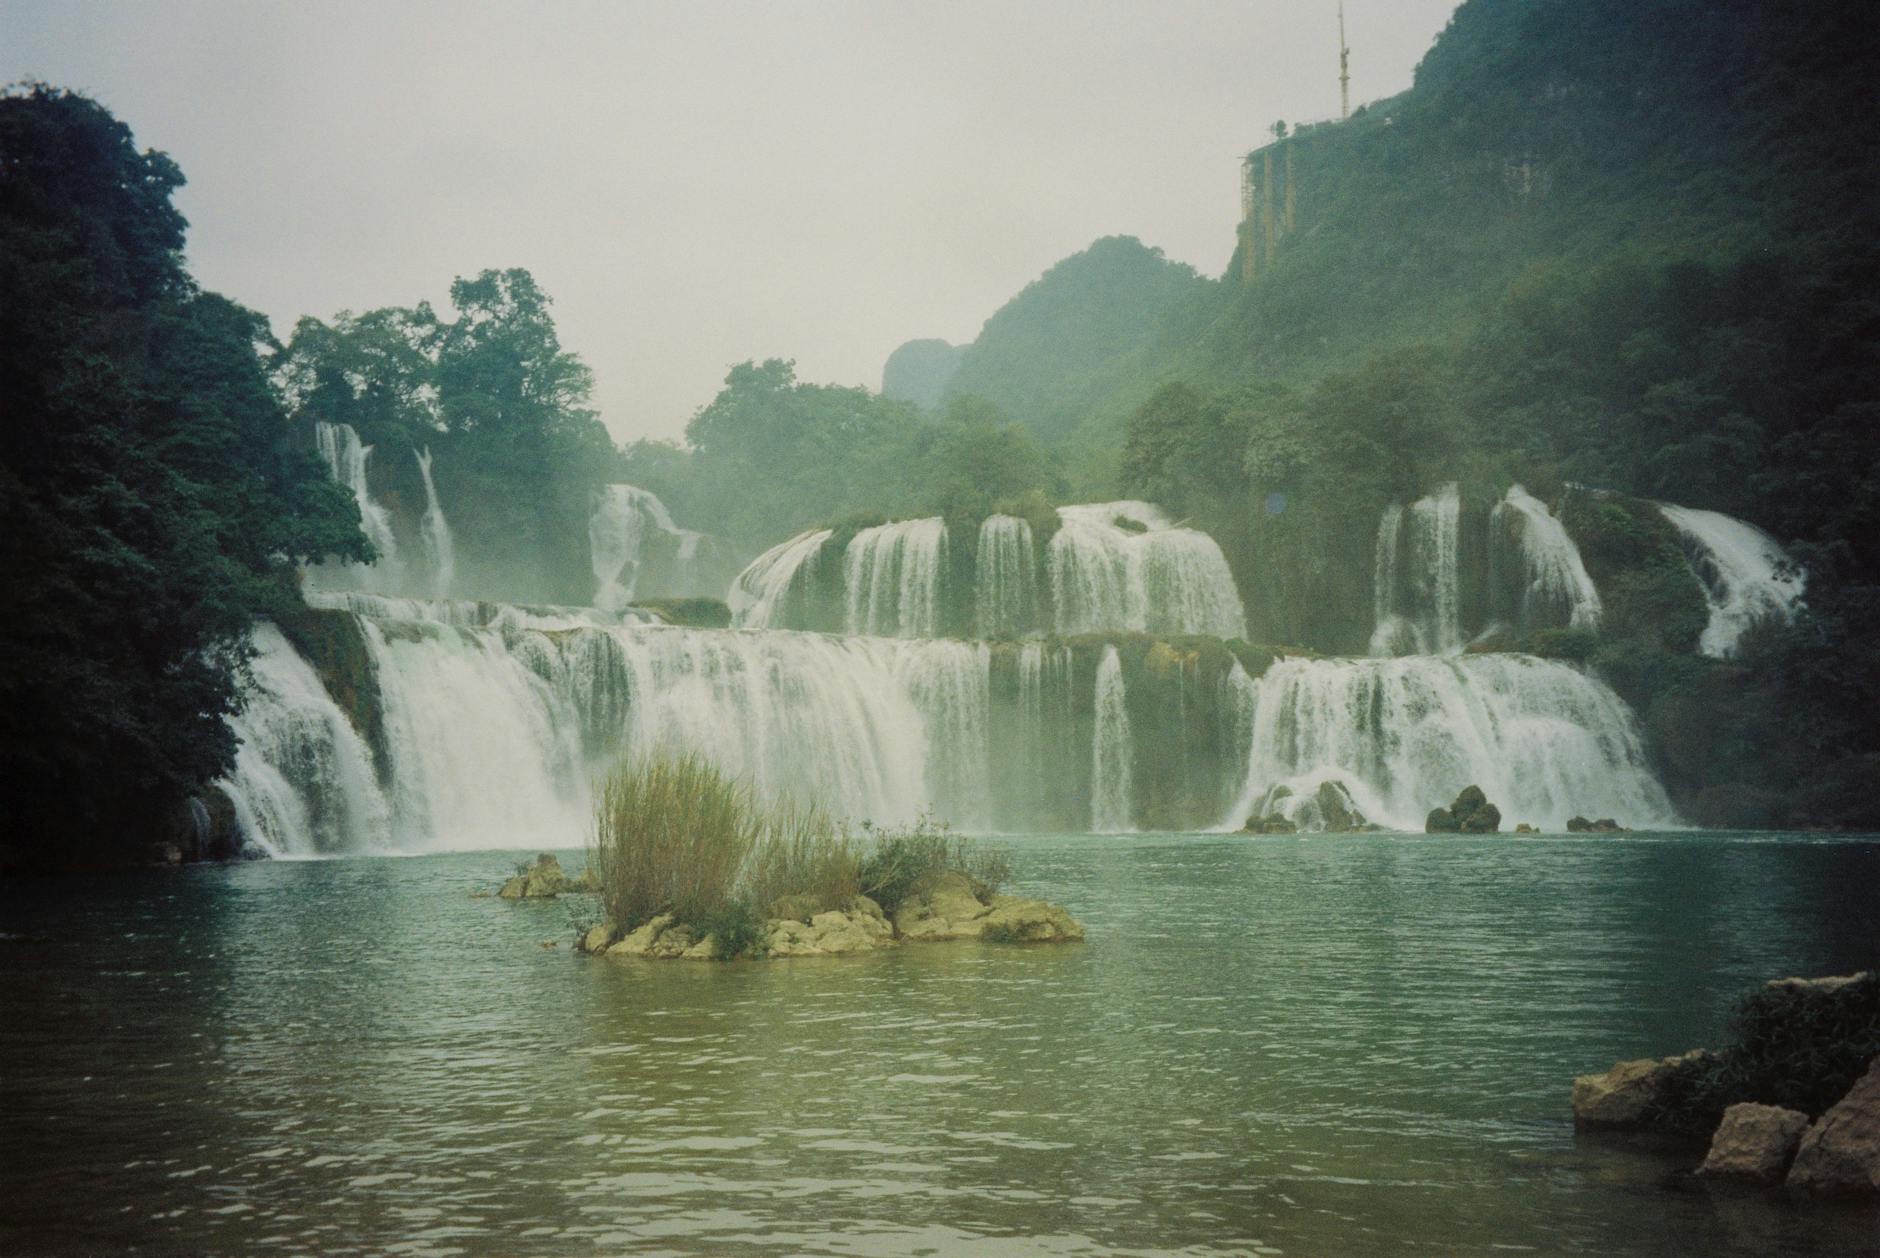 Cascades of Ban Gioc Waterfall at Ba Be Lake in Vietnam